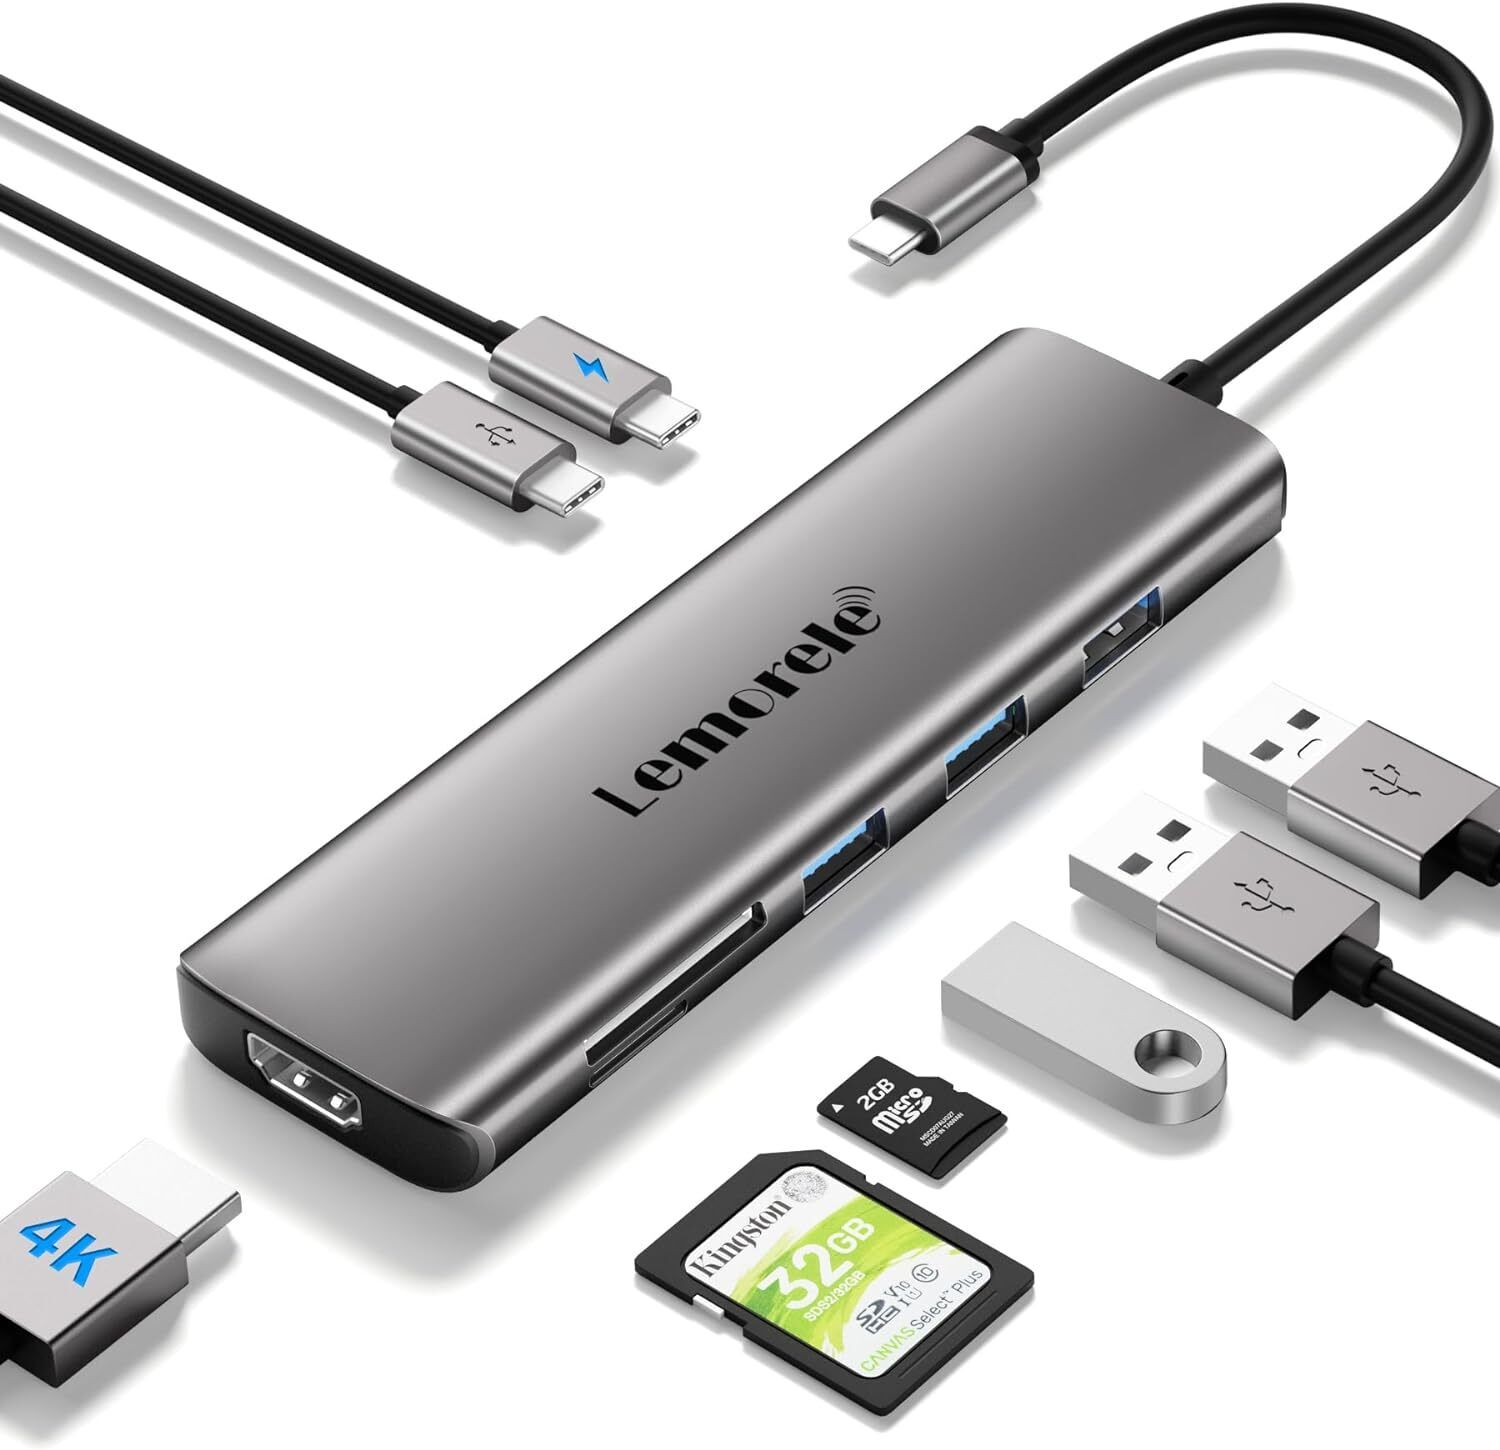 Lemorele 8-in-1 USB C Hub Multiport Adapter, USB-C Hub with 4K HDMI Output, 100W